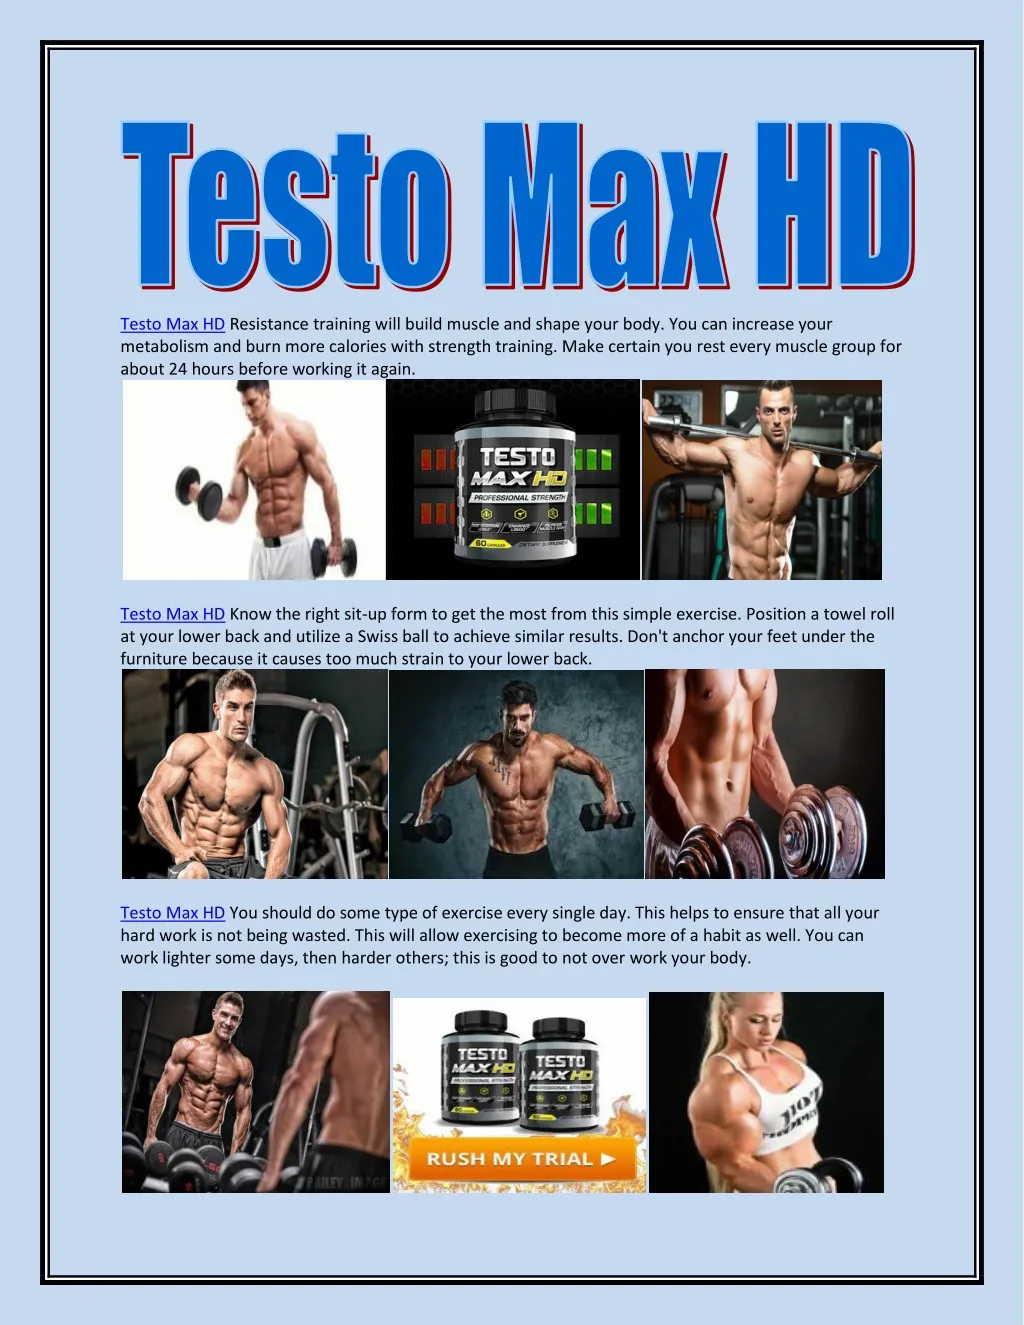 testo max hd resistance training will build